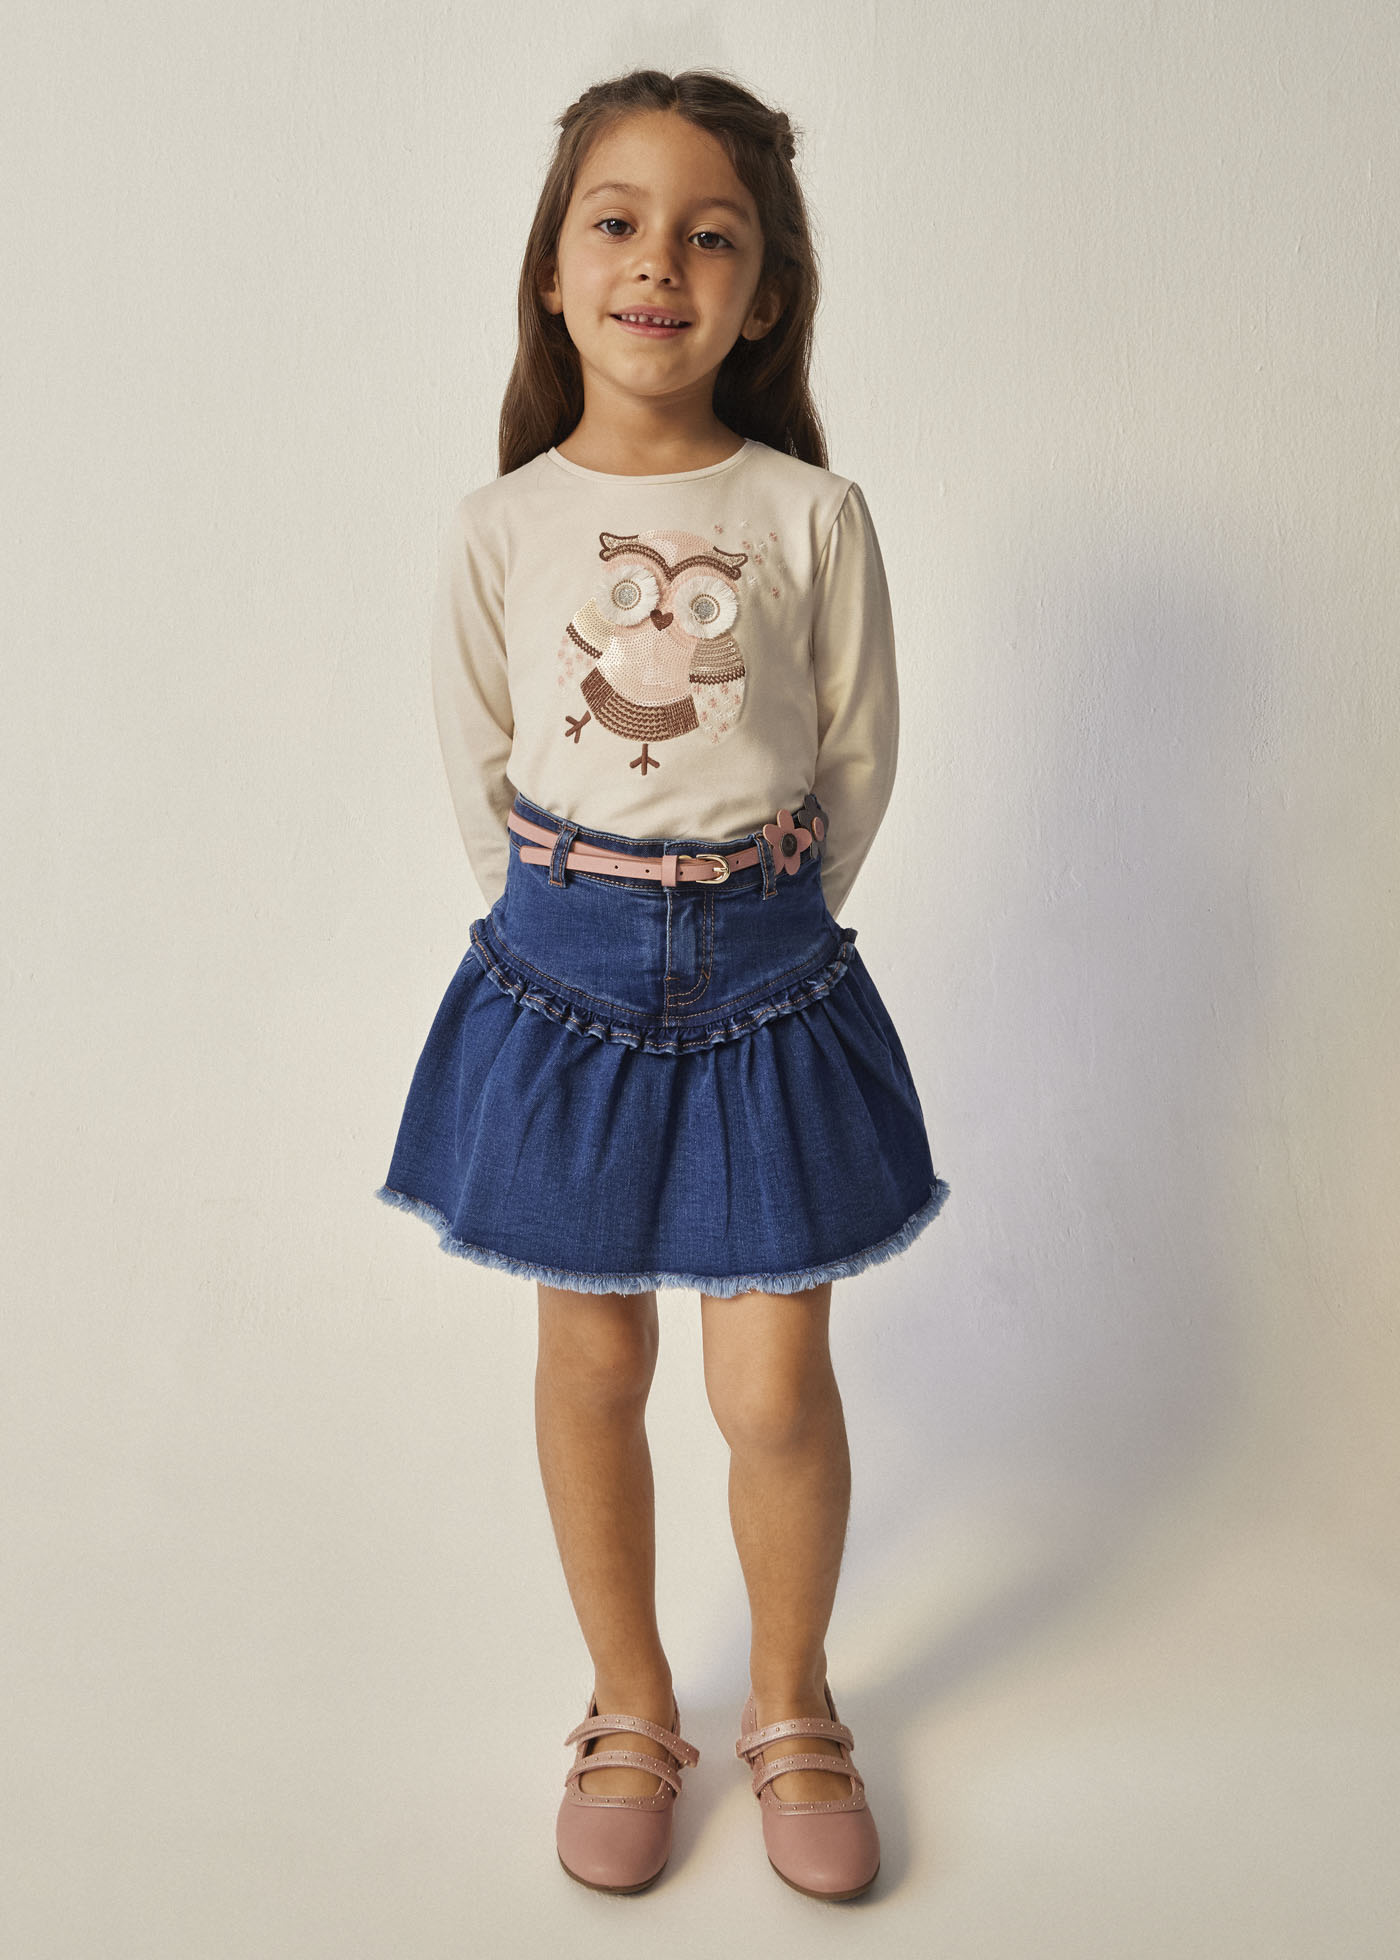 Designer Jean Skirts for Baby Girls - FARFETCH